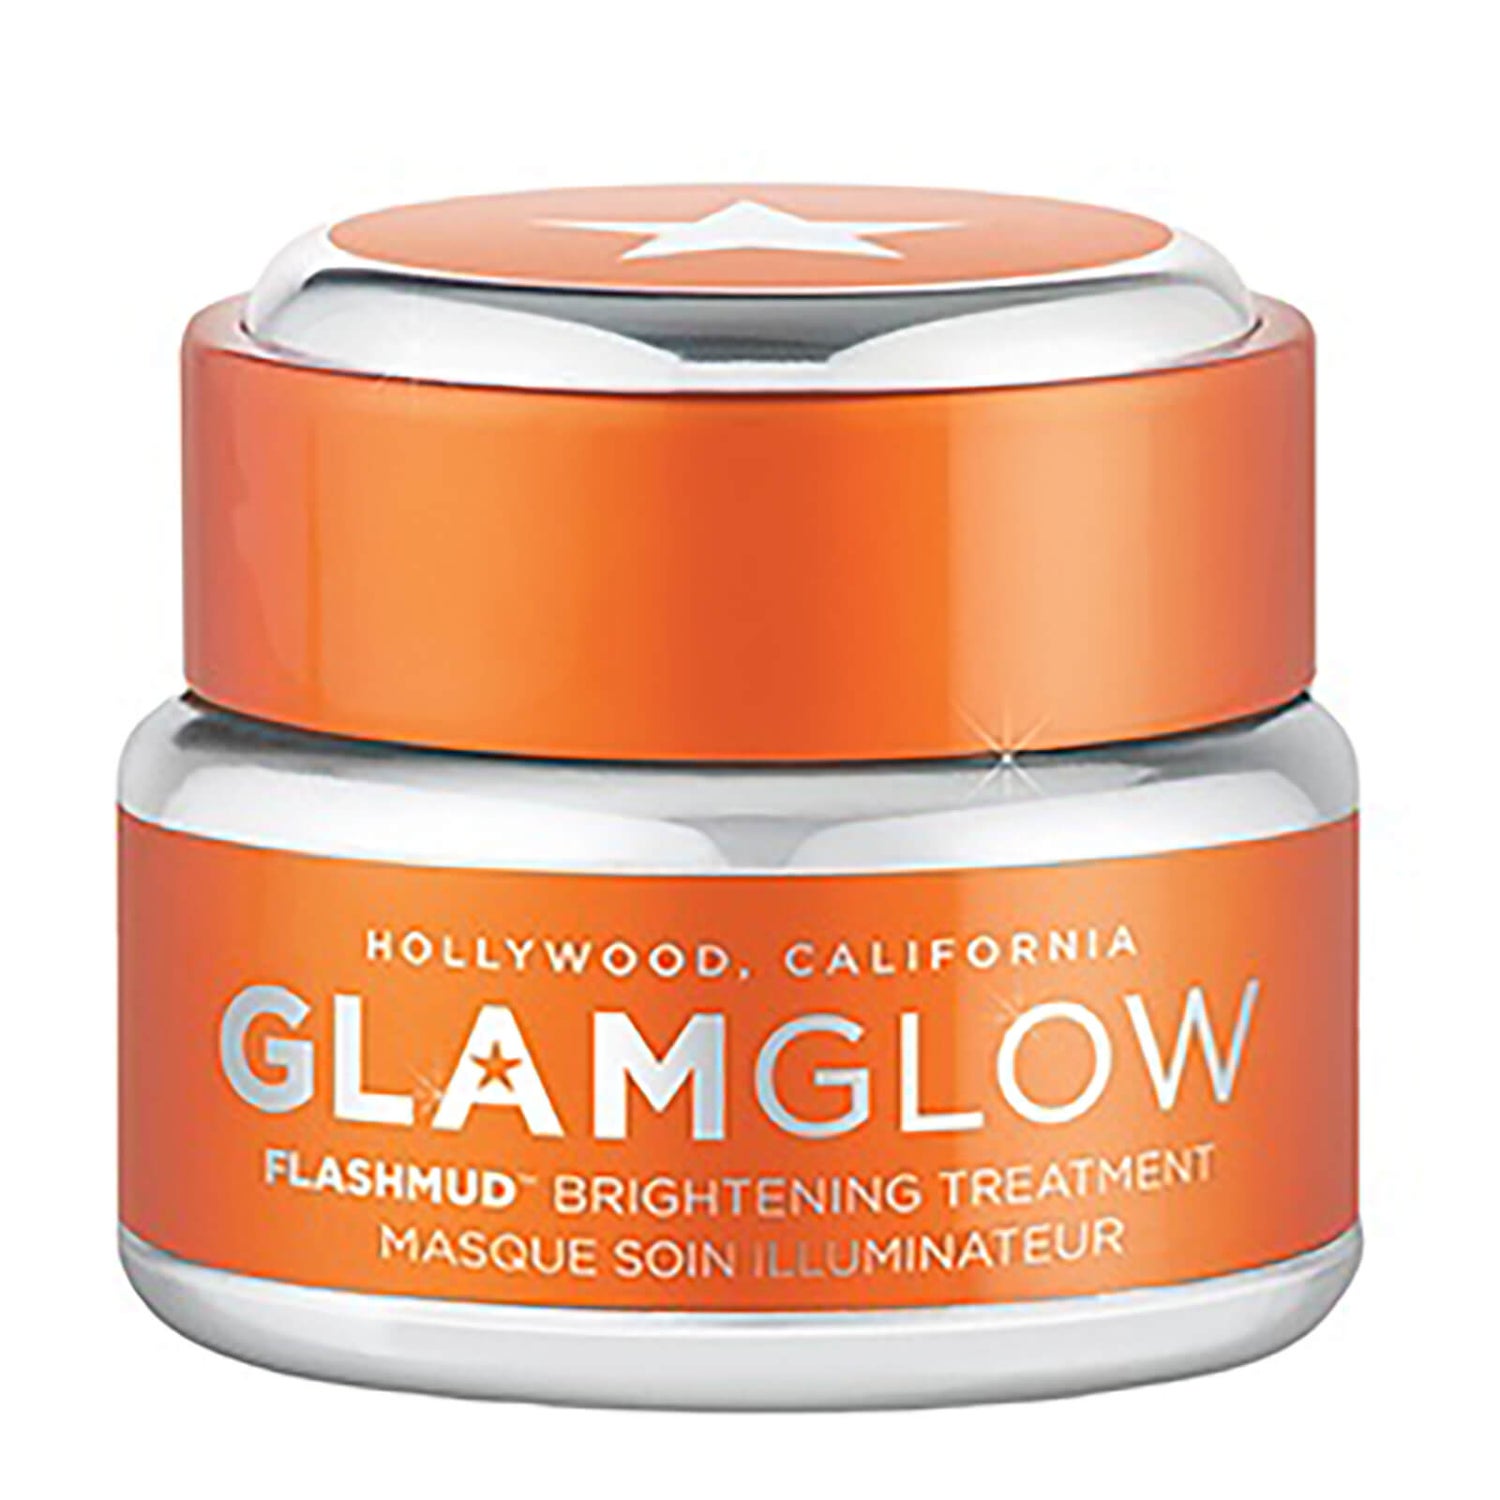 GLAMGLOW FLASHMUD™ Brightening Treatment Glam To Go